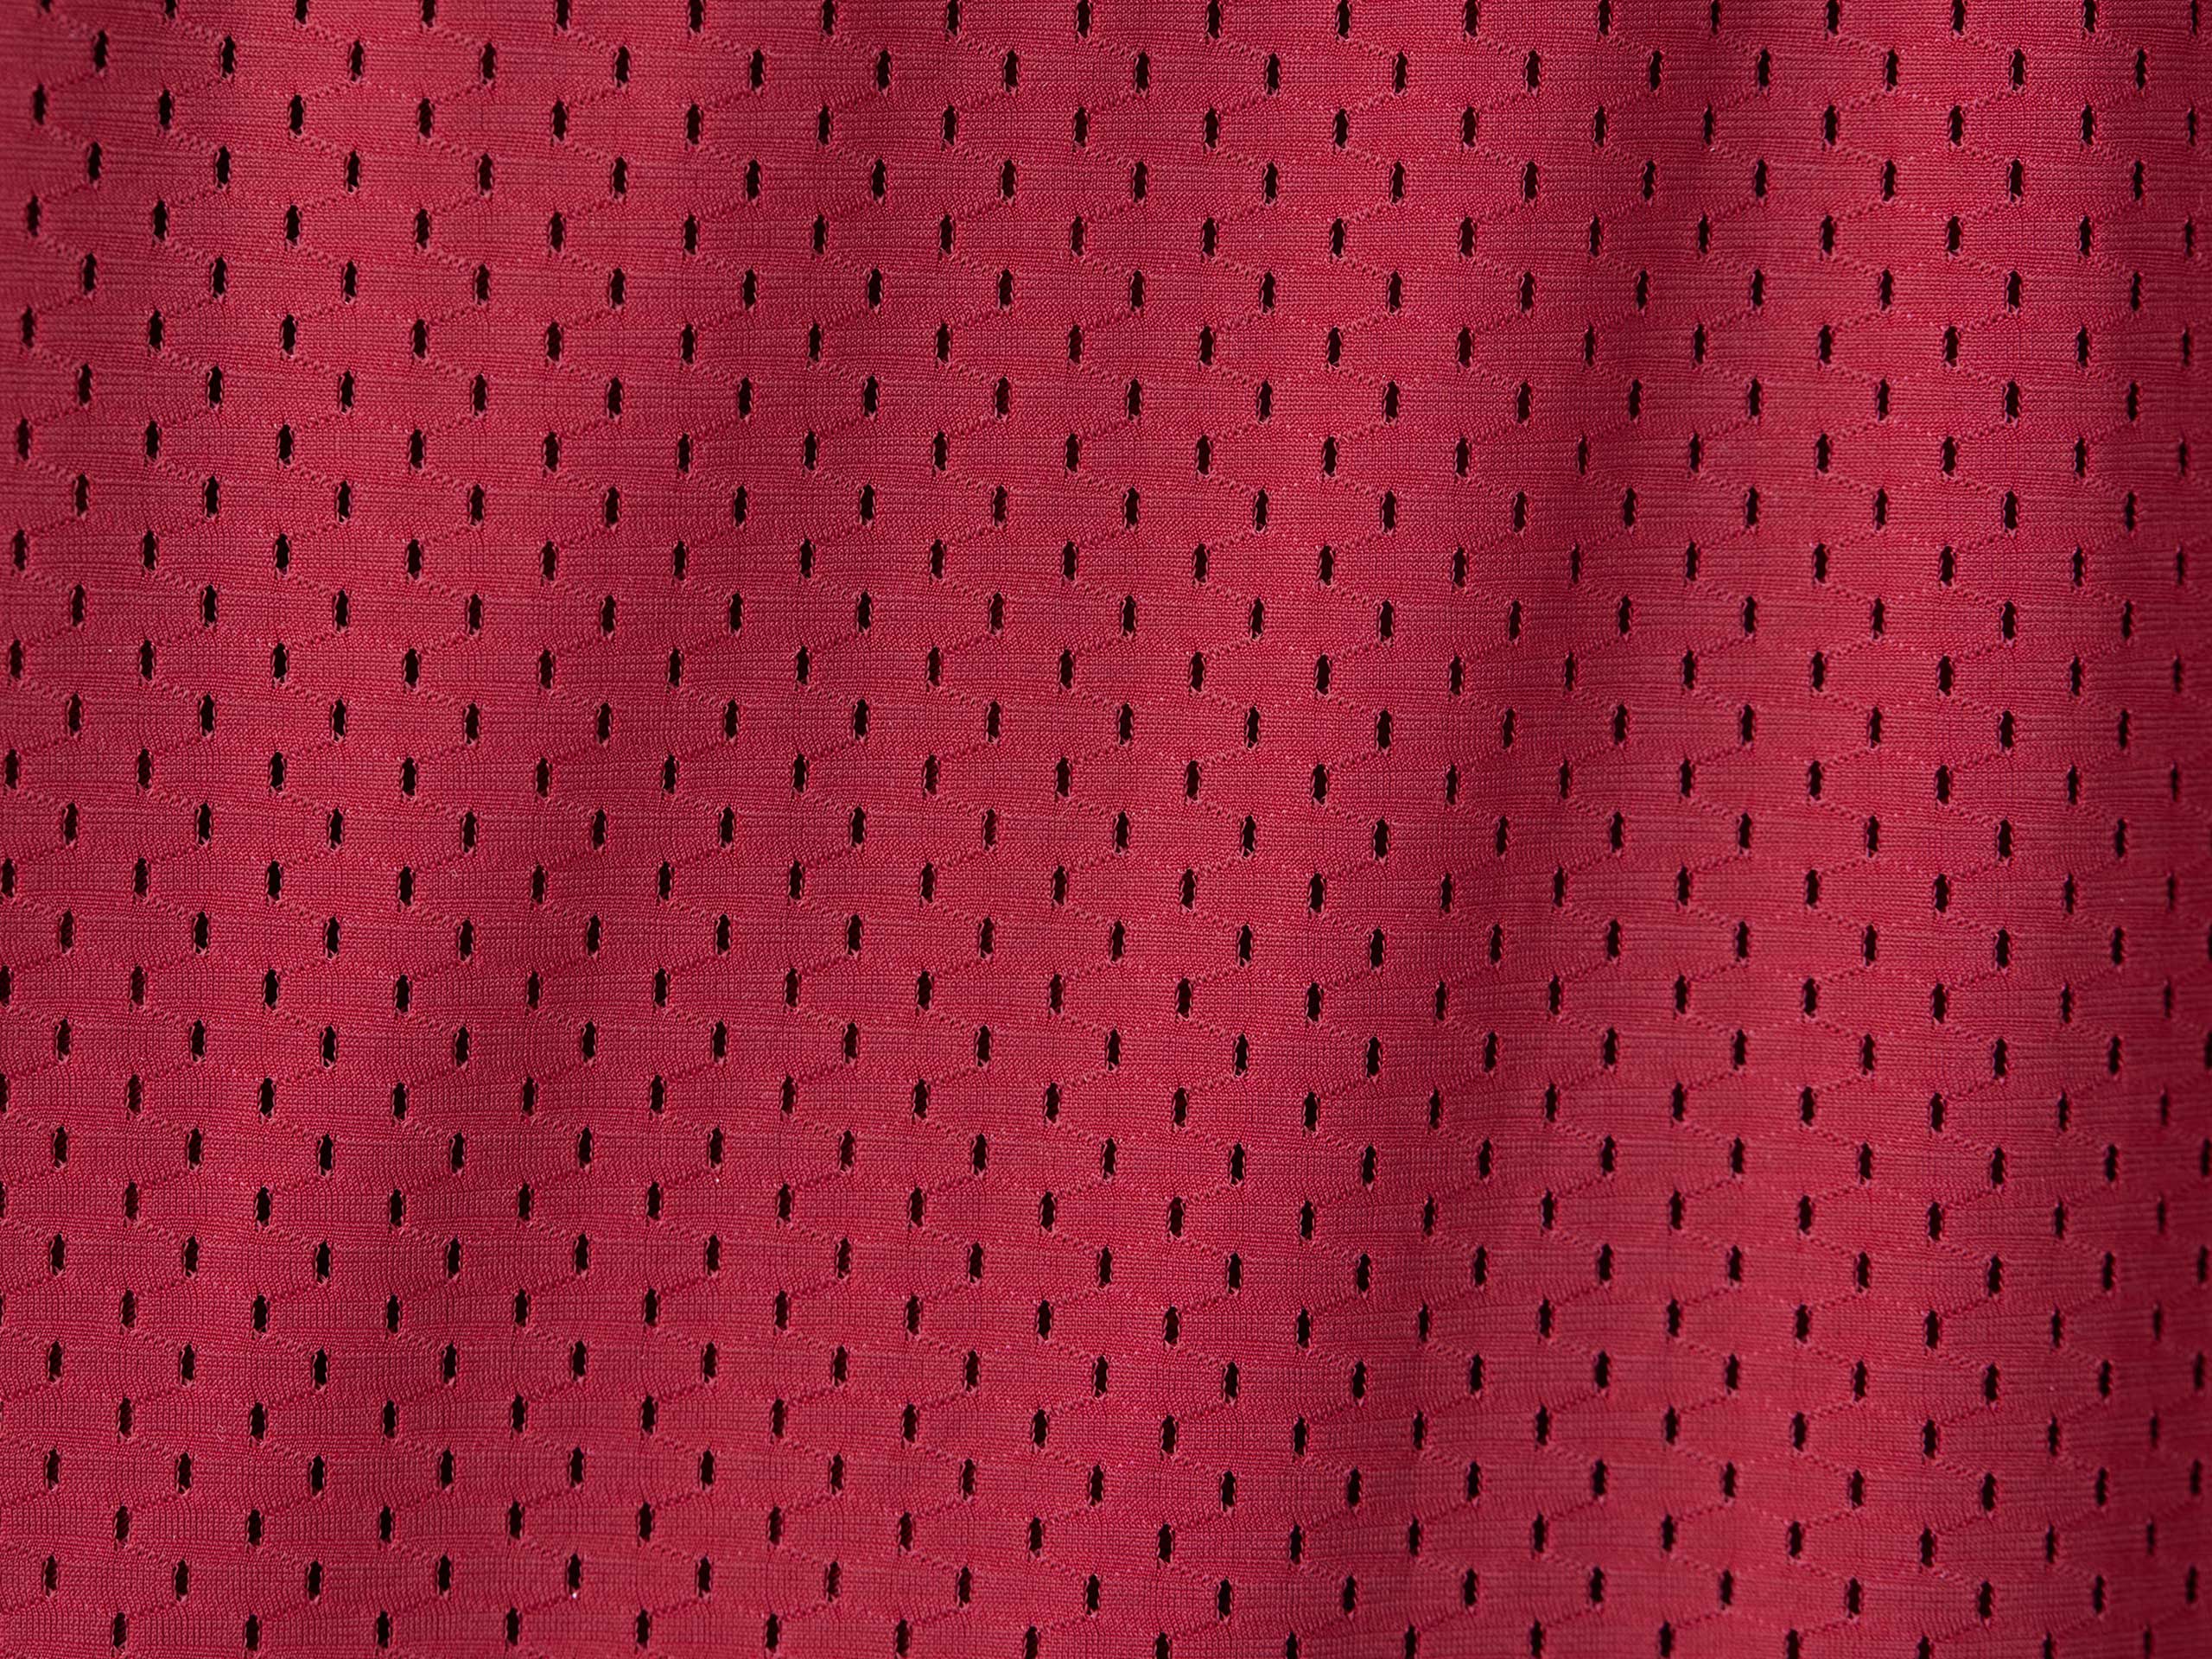 Close up detail shot of burgundy mesh texture.